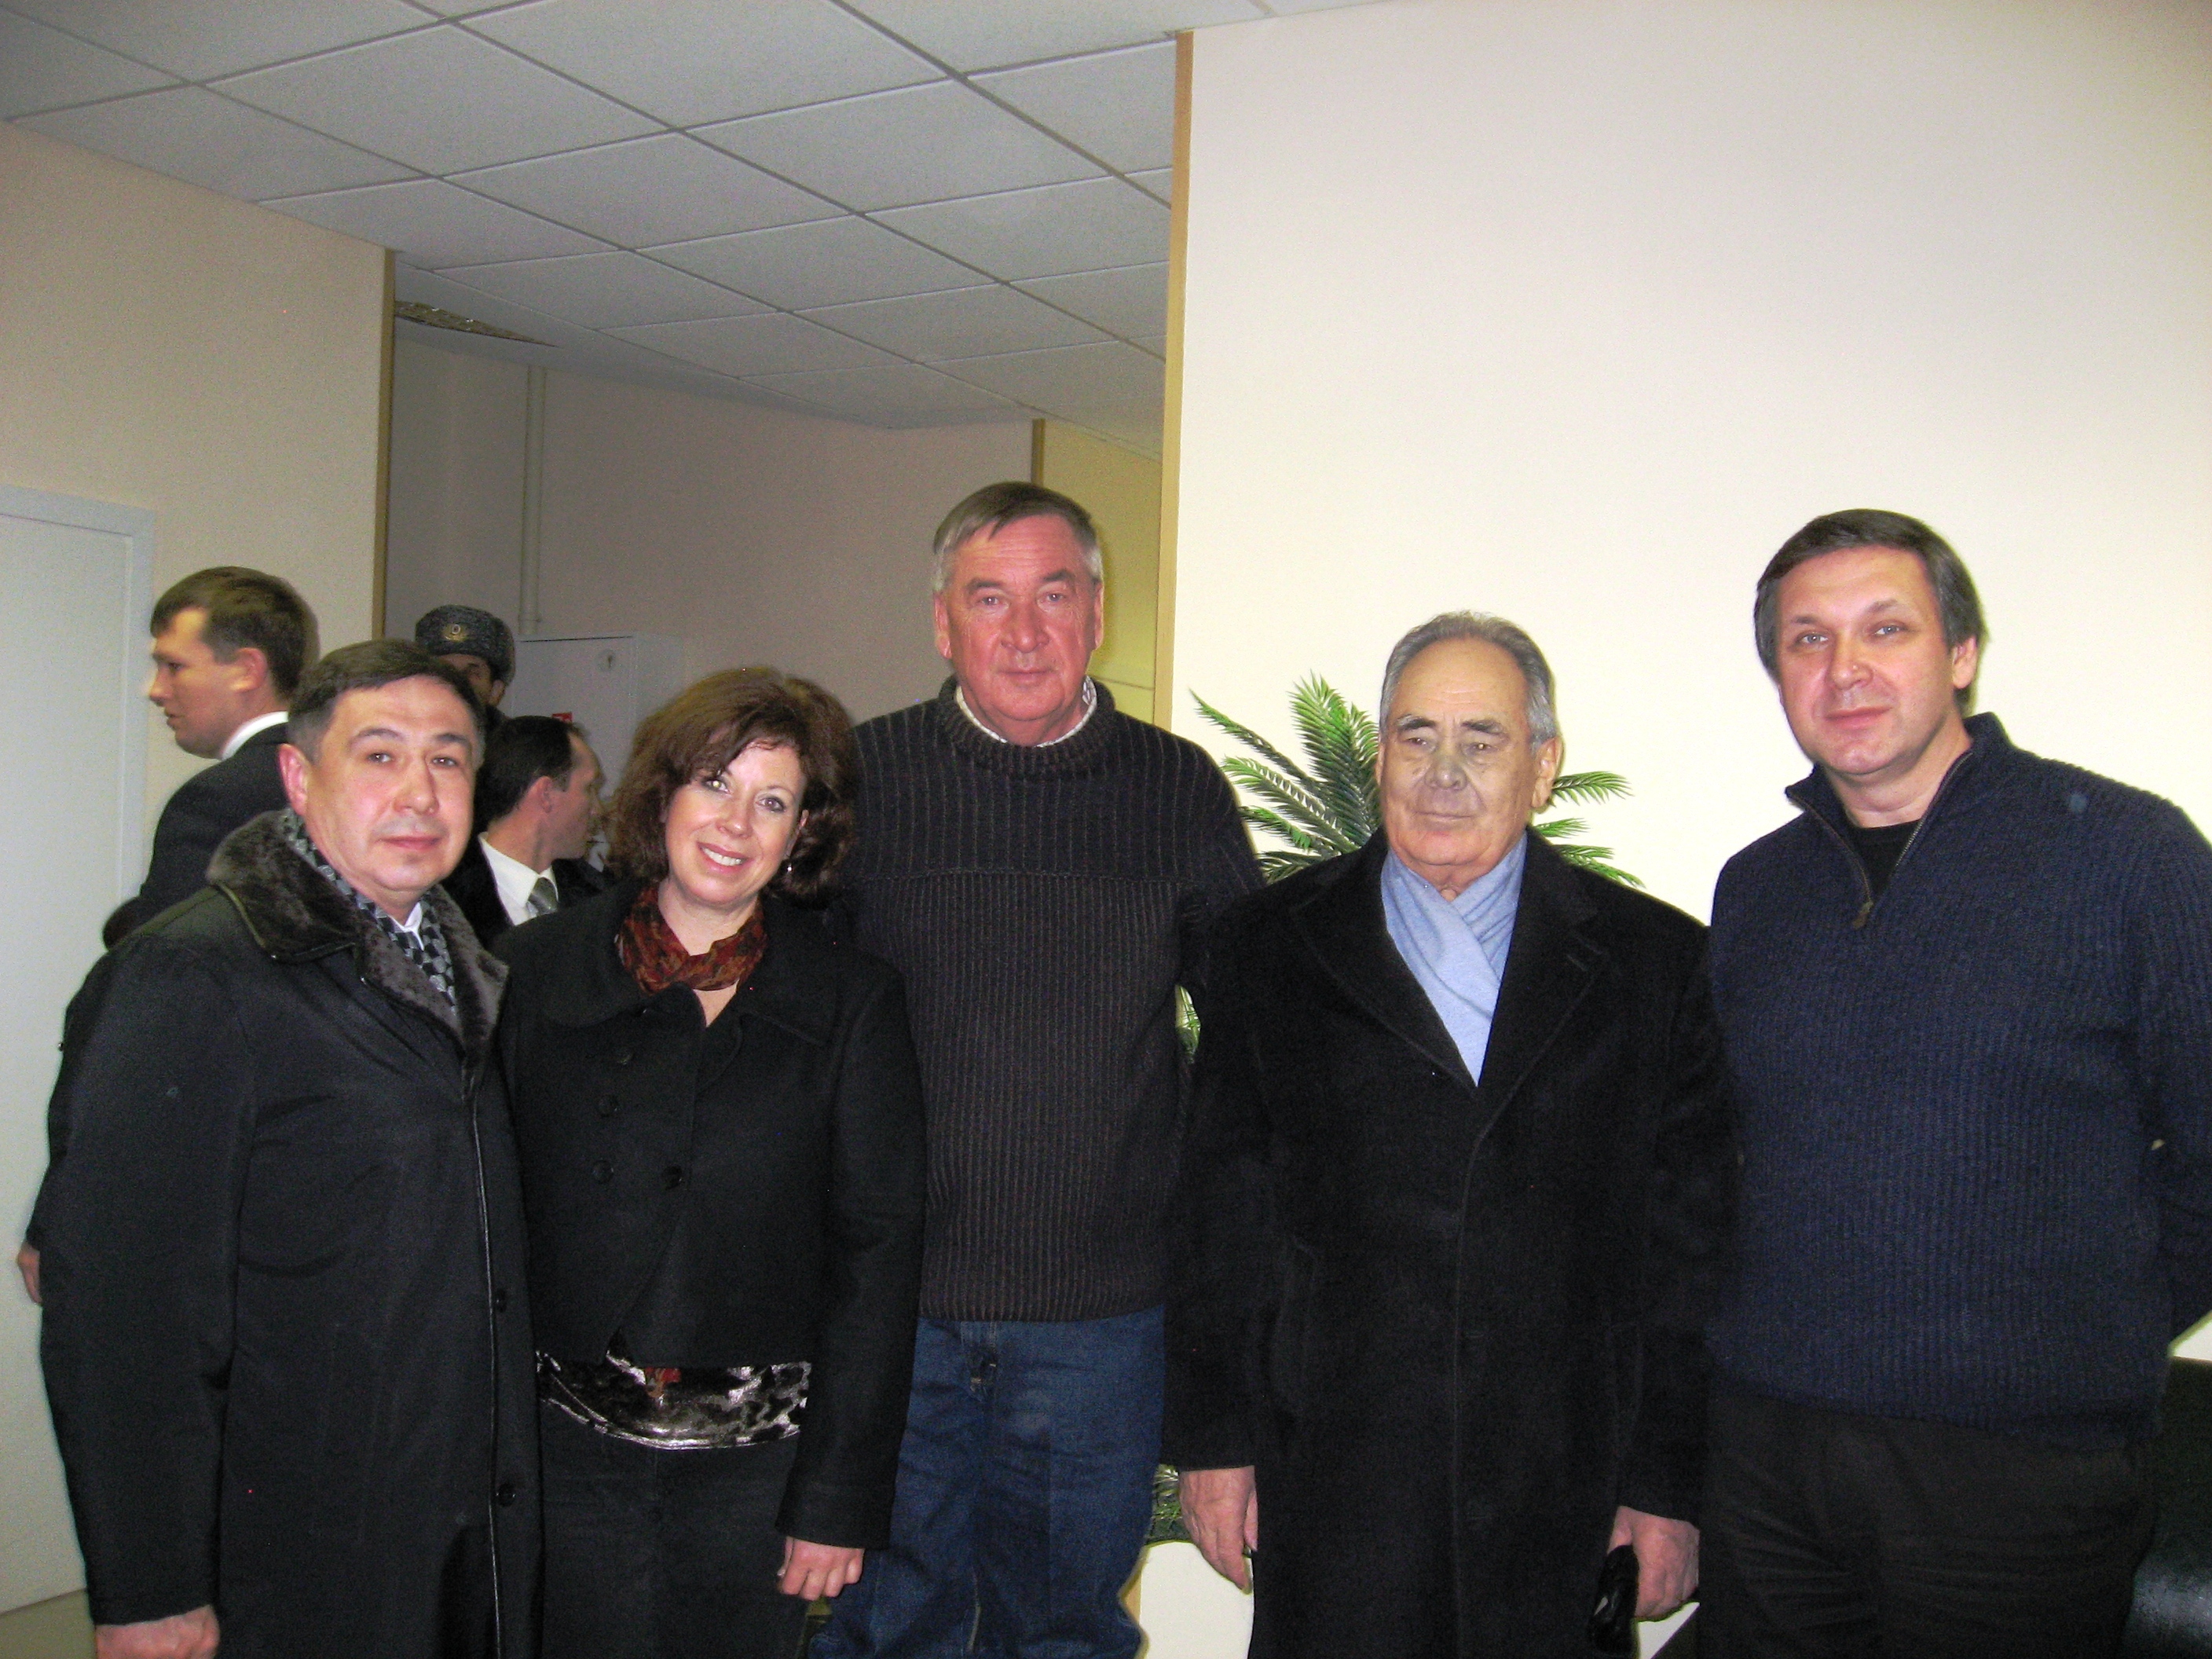 March 2008 - With Tatarstan Presisdent Shaimiev